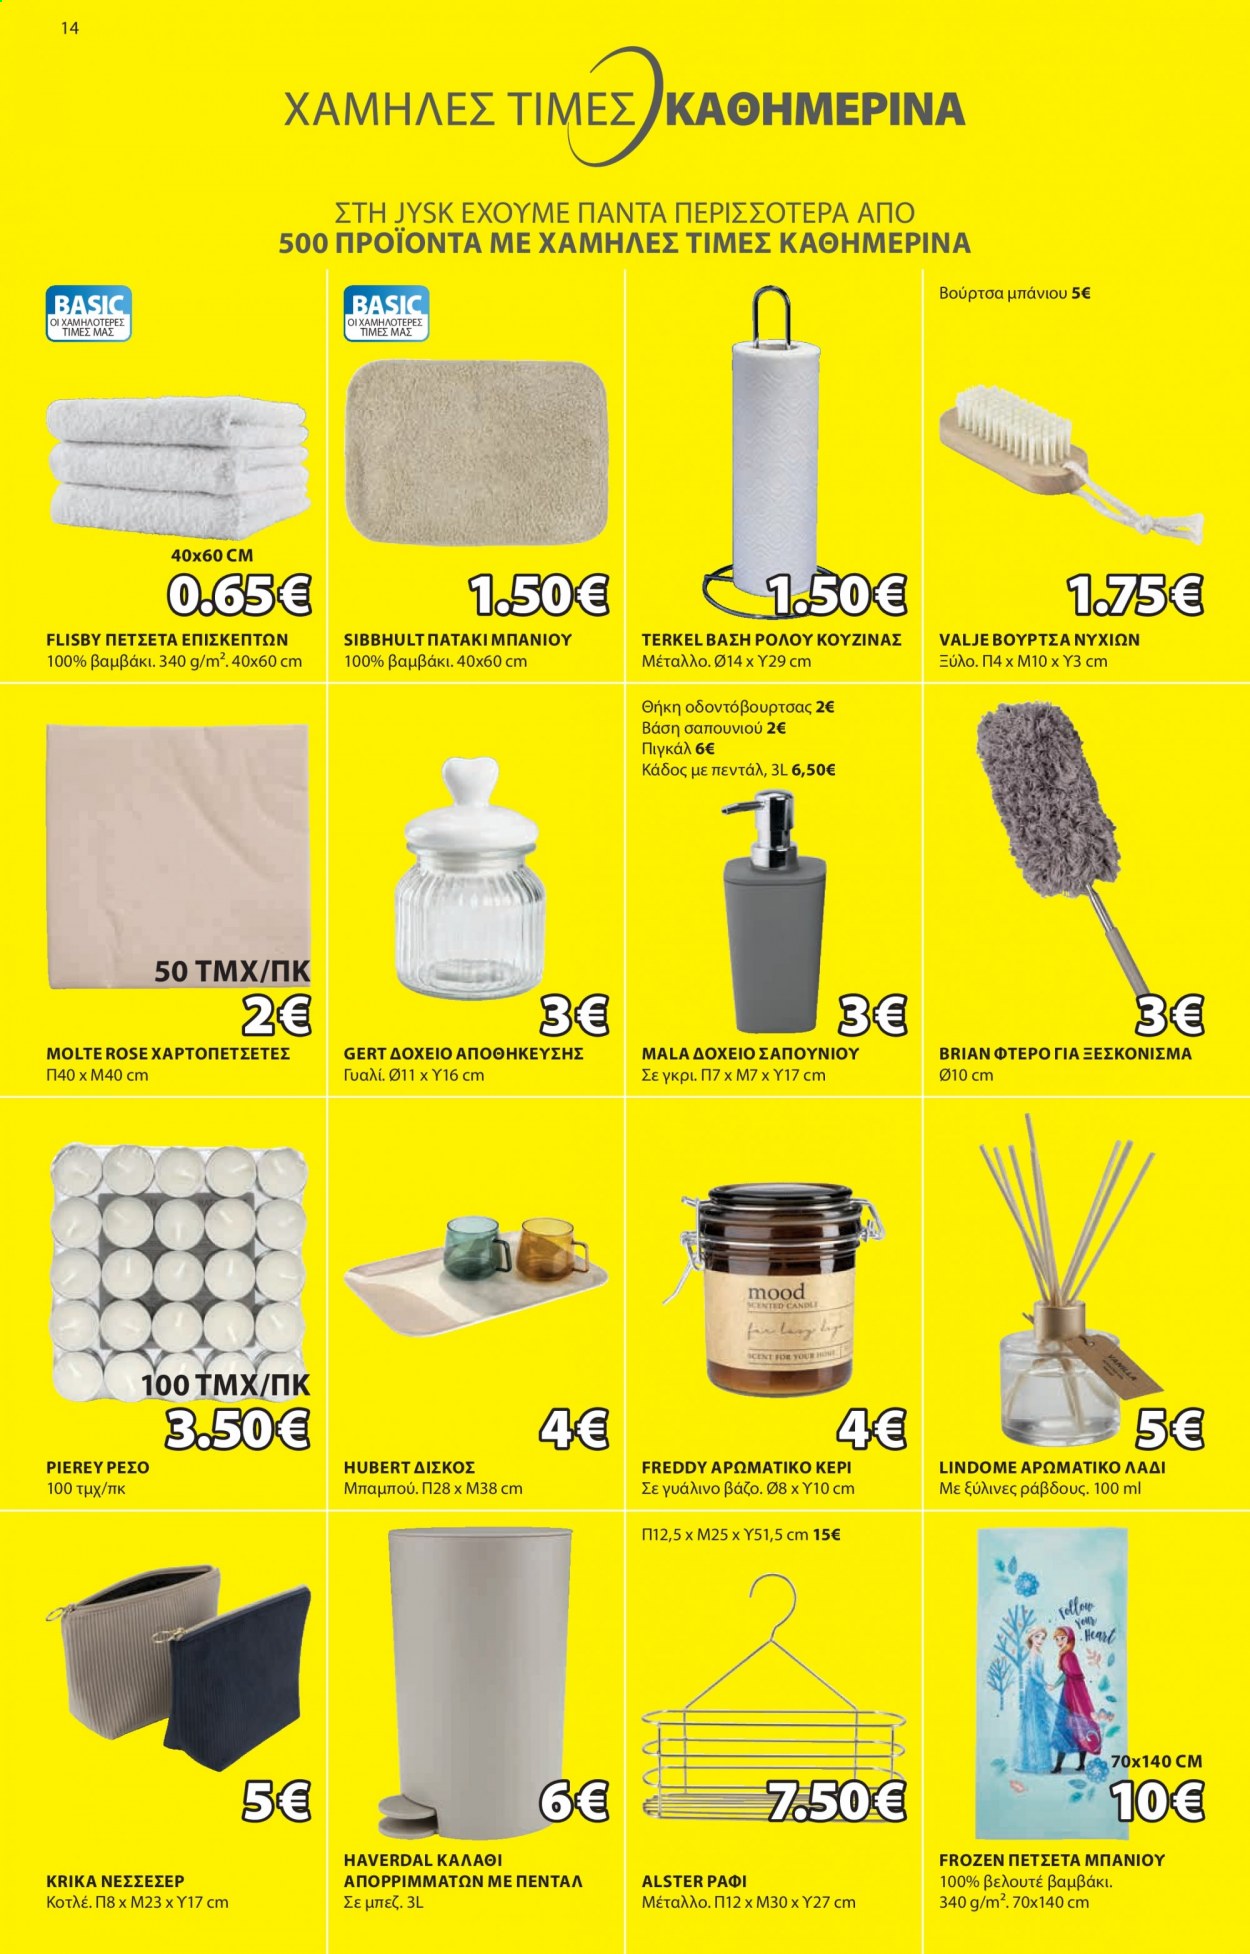 thumbnail - Φυλλάδια JYSK - 02.09.2021 - 15.09.2021 - Εκπτωτικά προϊόντα - δοχείο αποθήκευσης, ράφια, λάδι, αποθήκευσης, κερί, πετσέτα, βάζο. Σελίδα 14.